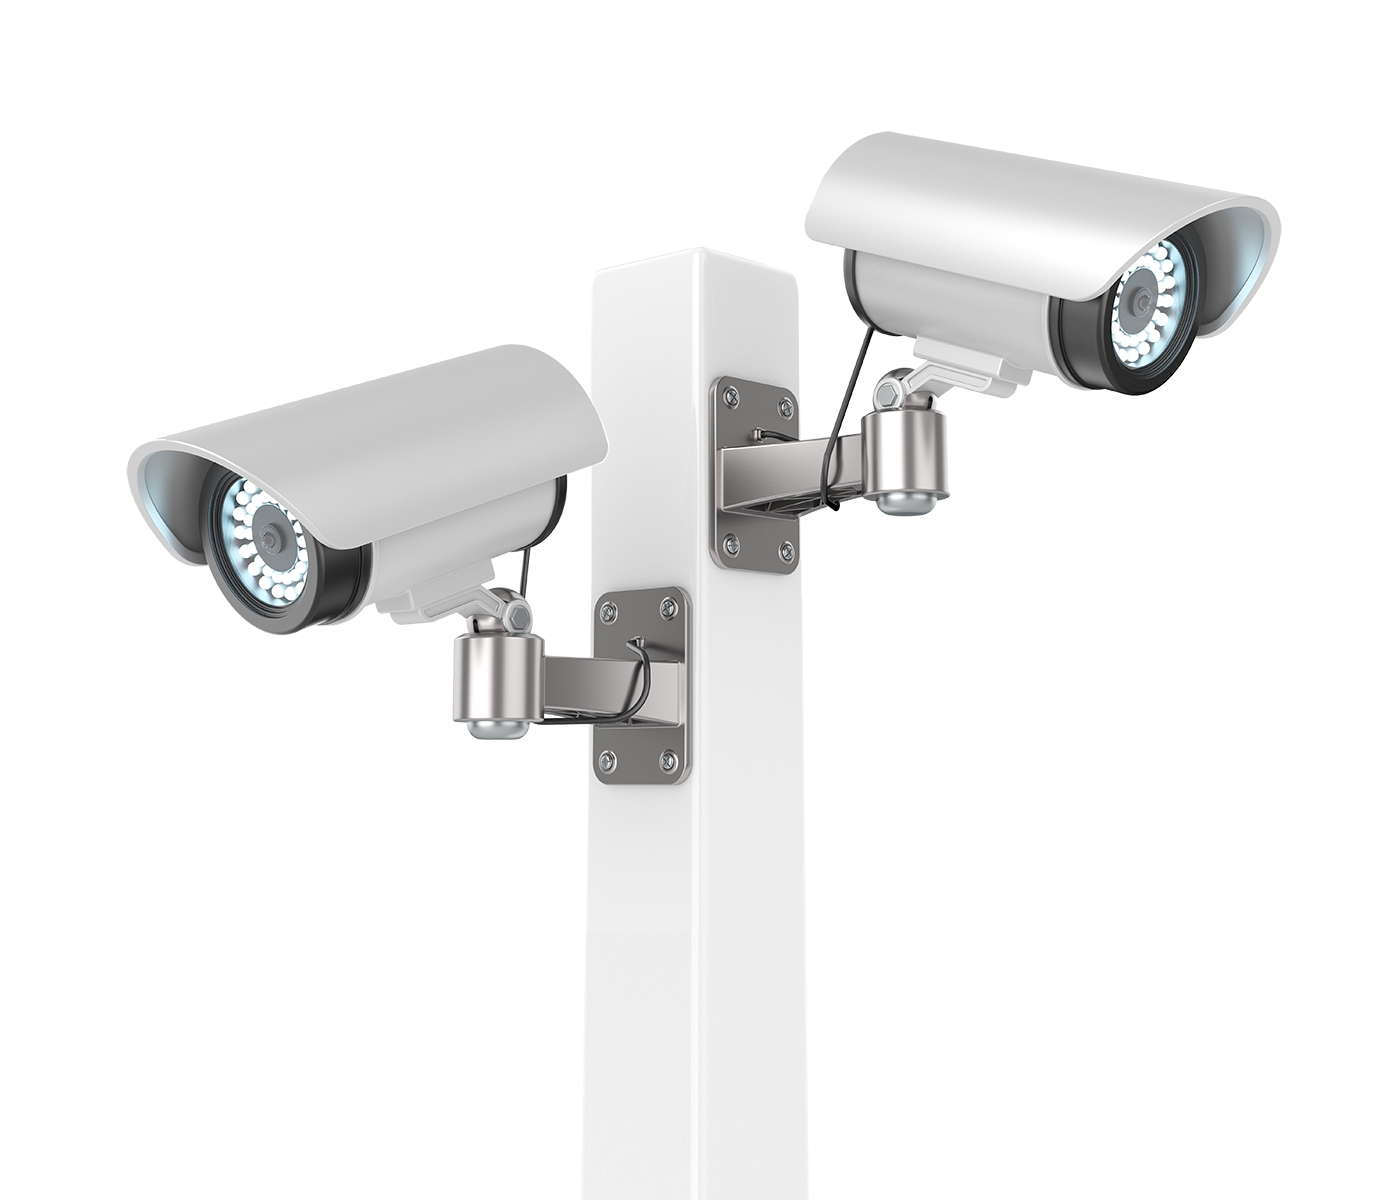 wincon security cameras for loss prevention surveillance